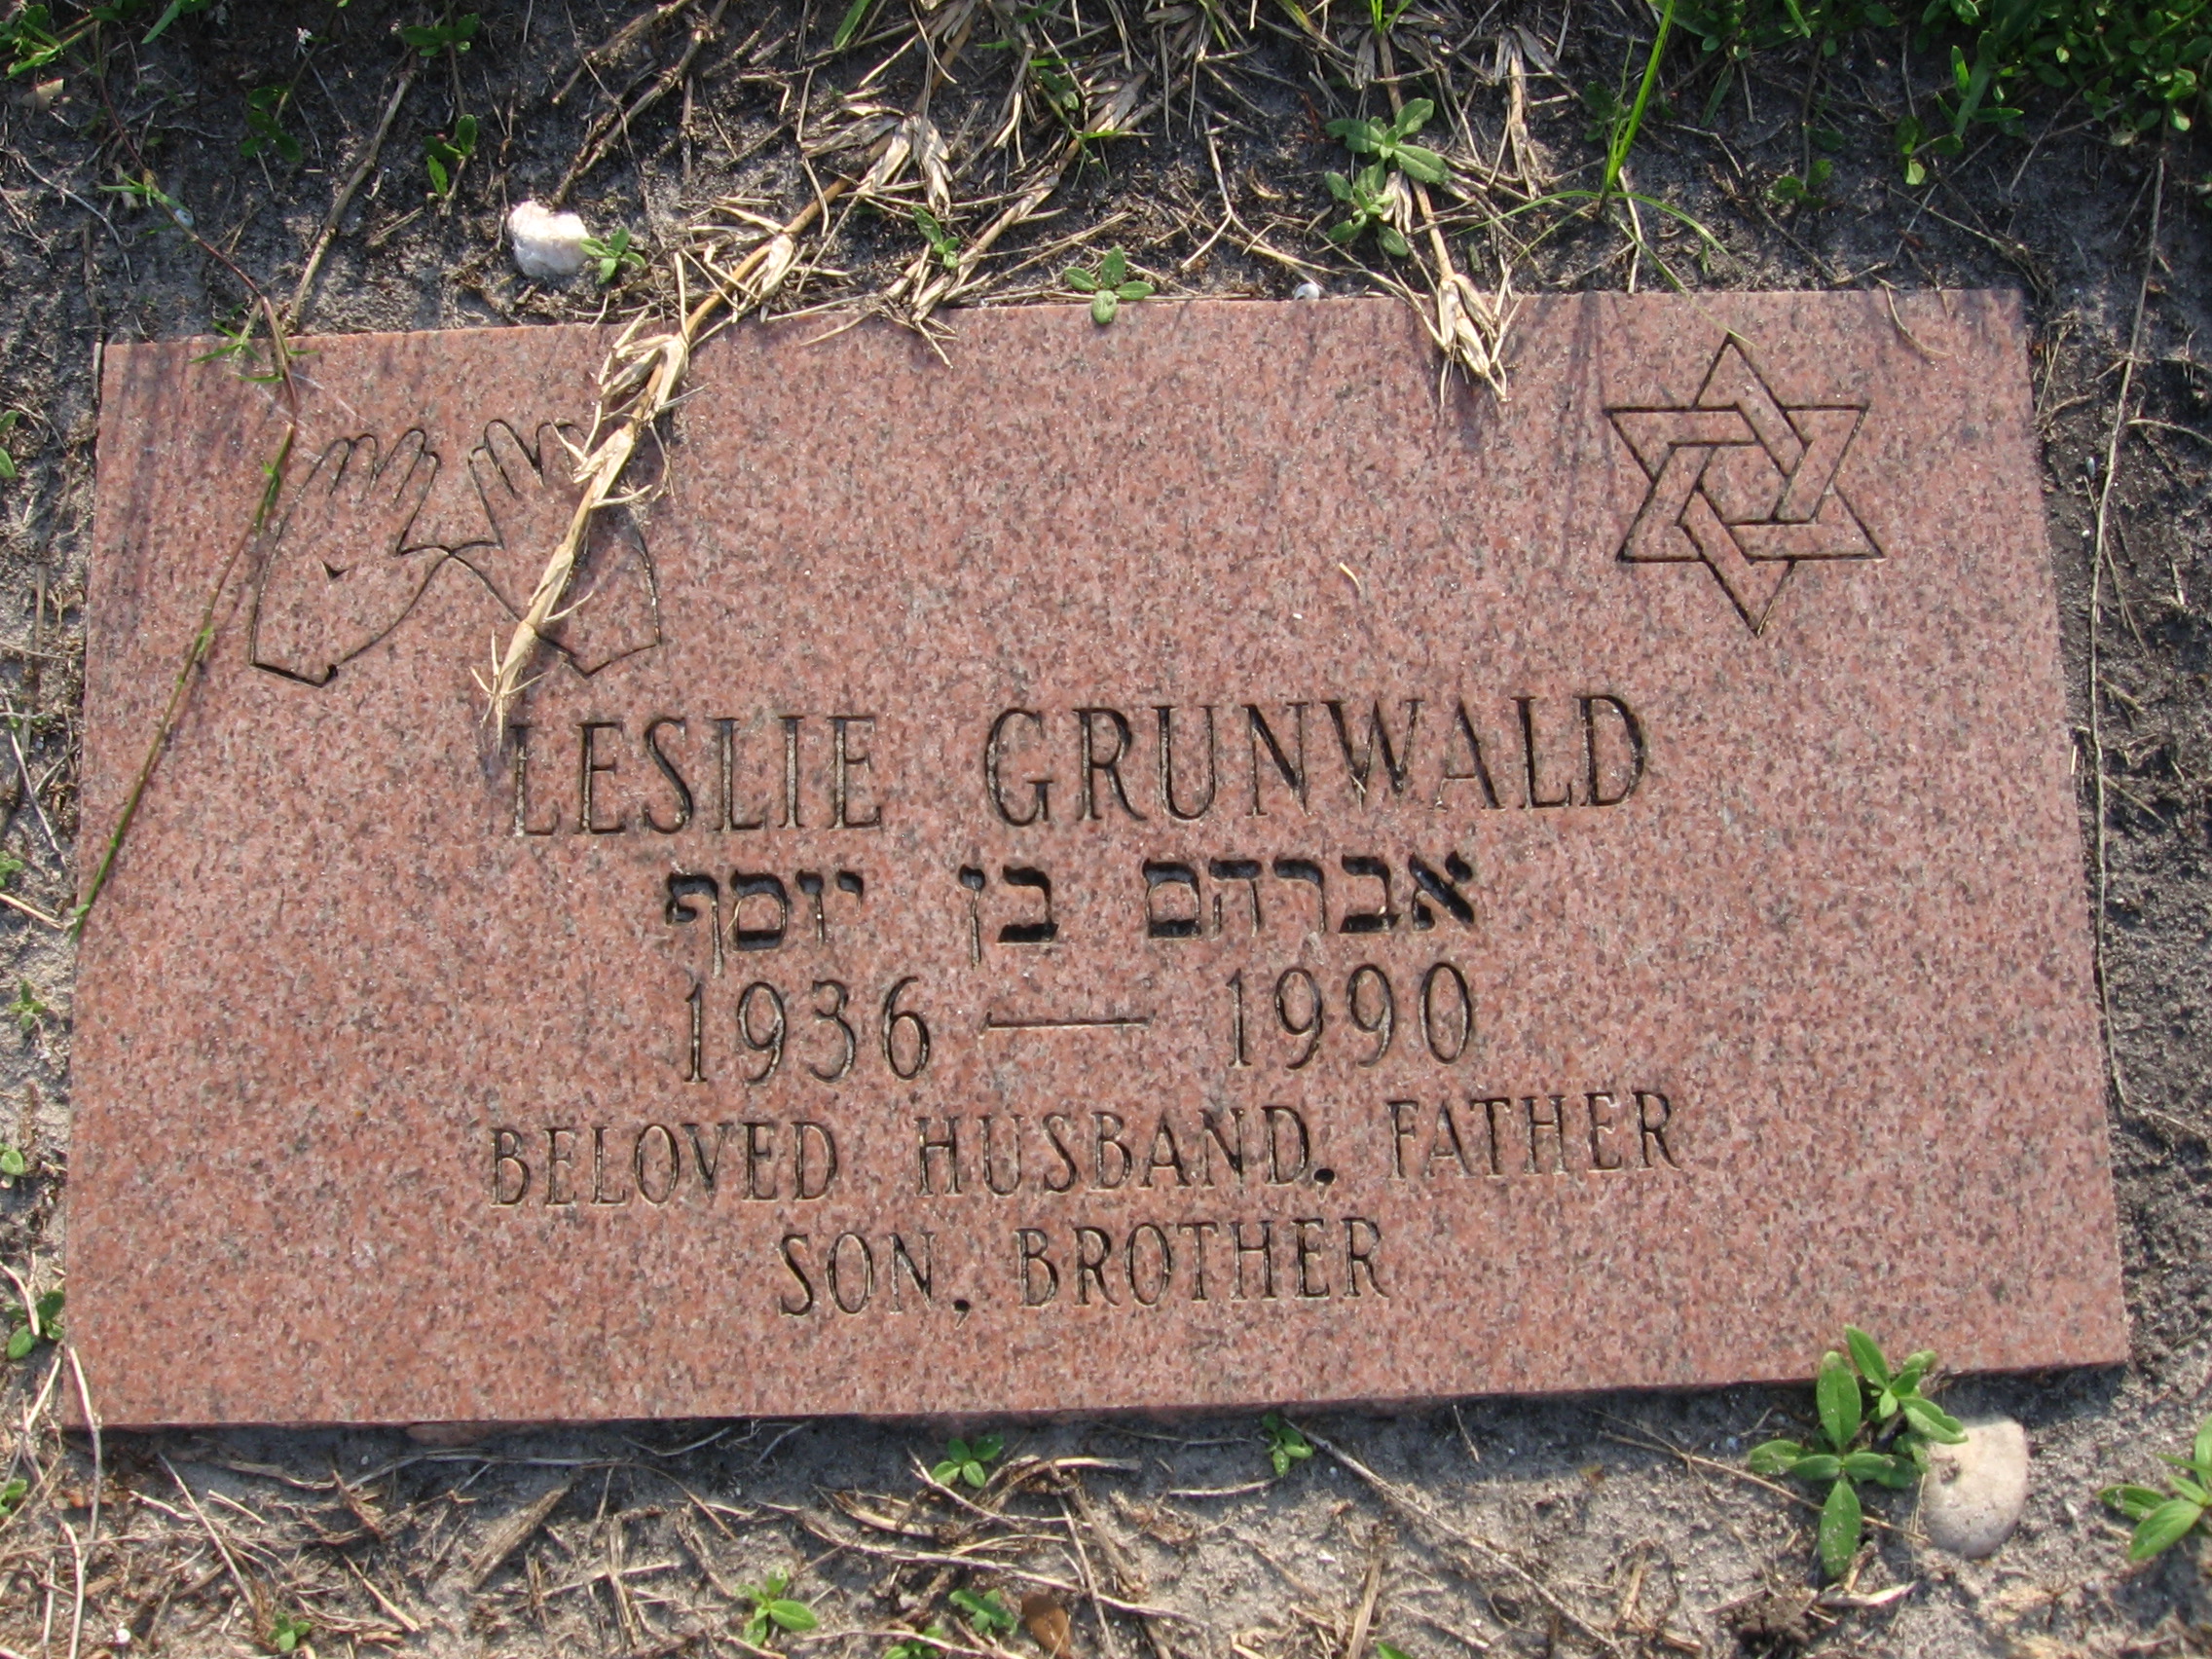 Leslie Grunwald